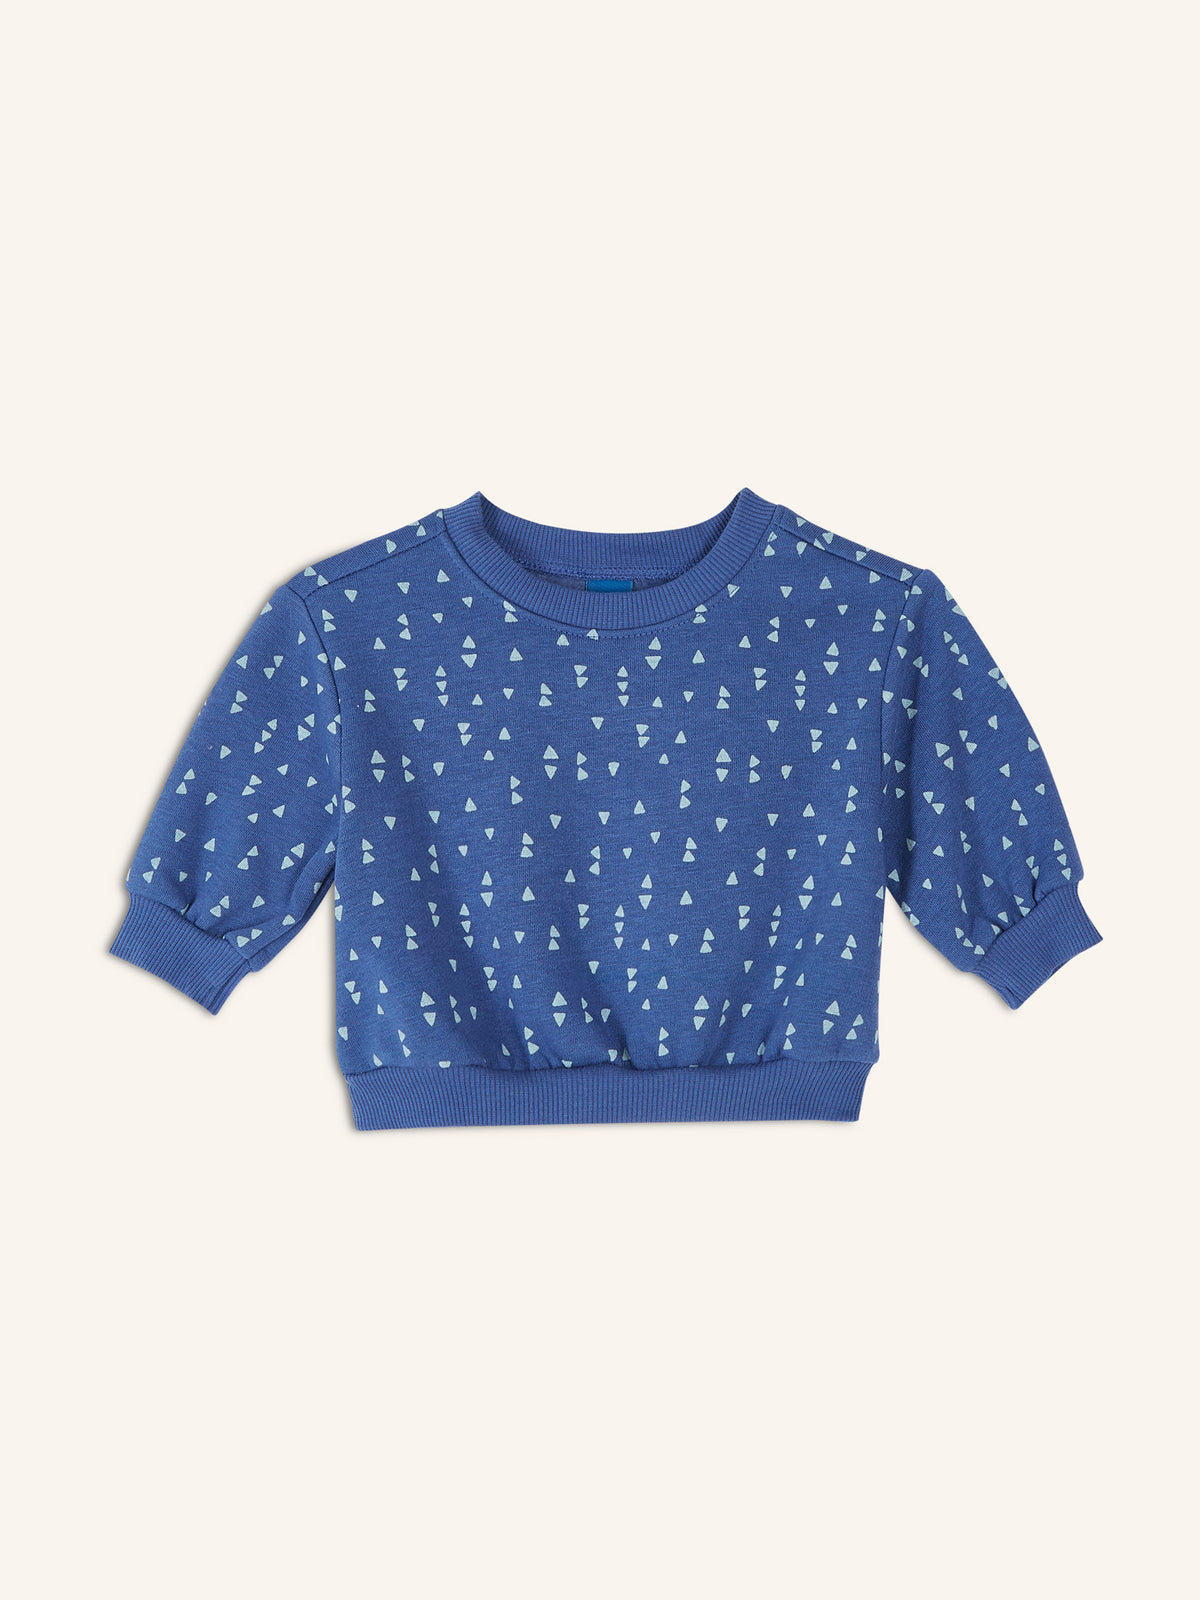 Unisex Printed Sweatshirt for Baby